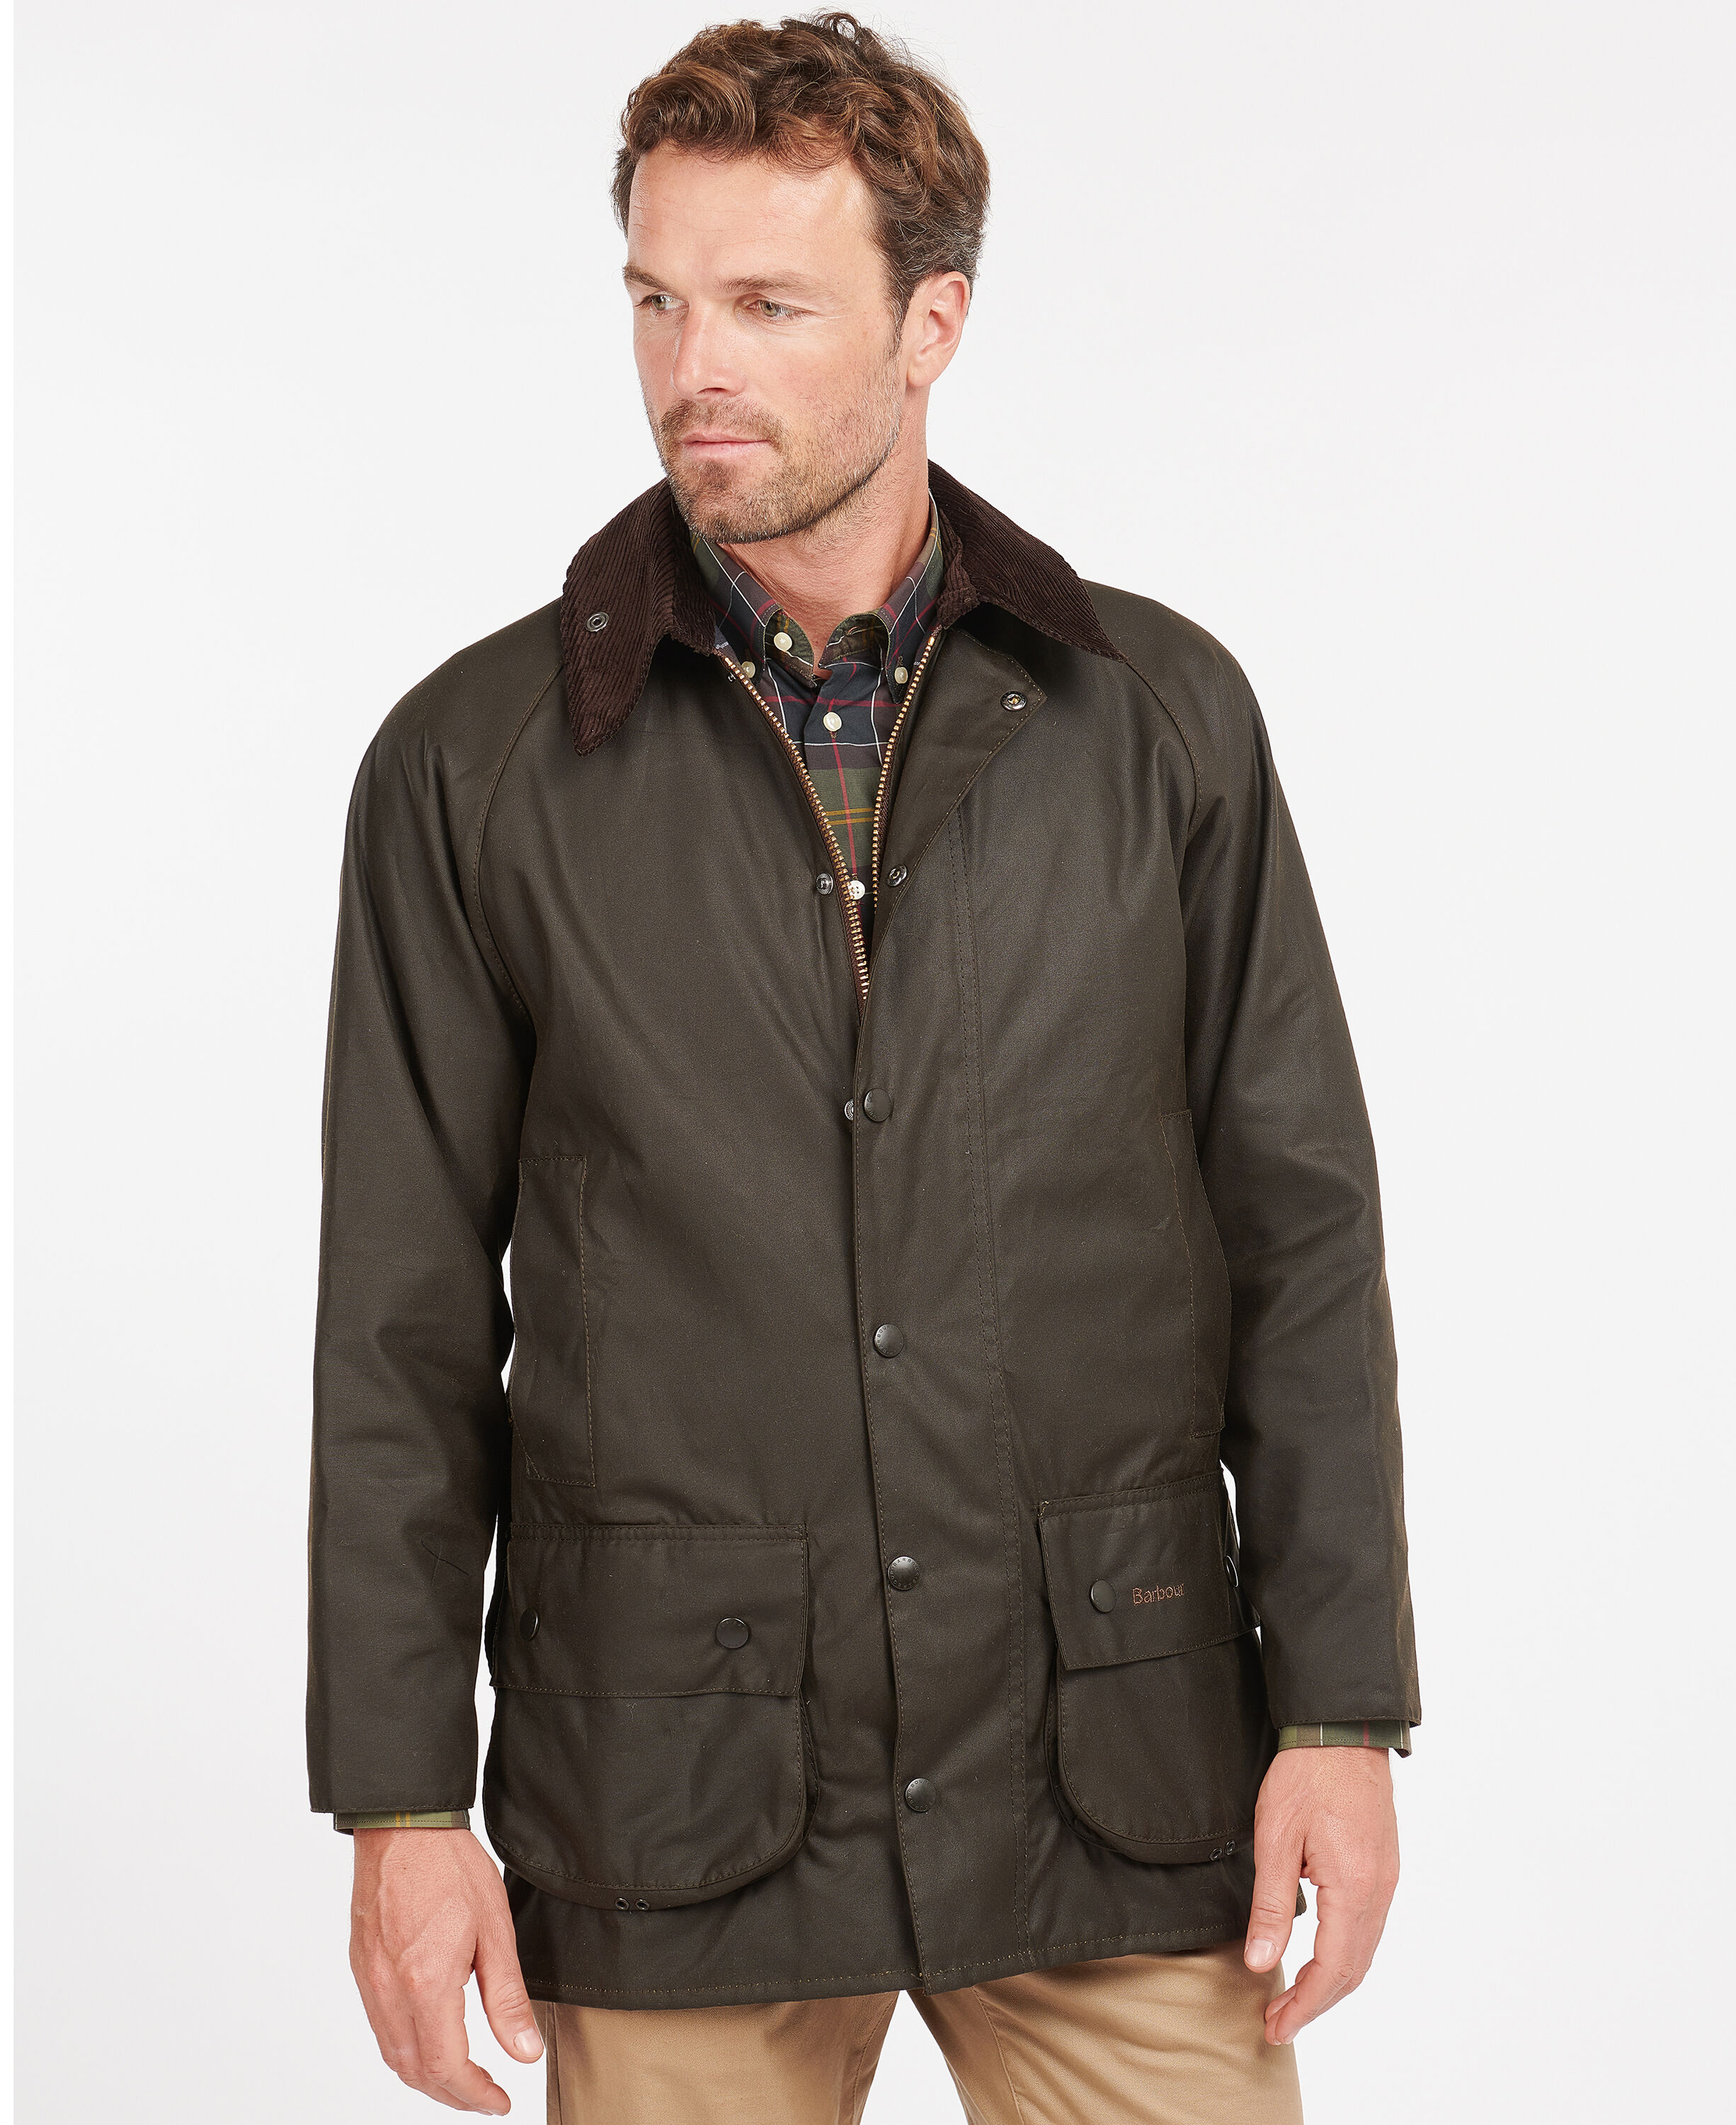 Barbour Barbour classic beaufort wax jacket olive - size 42 Coats ...